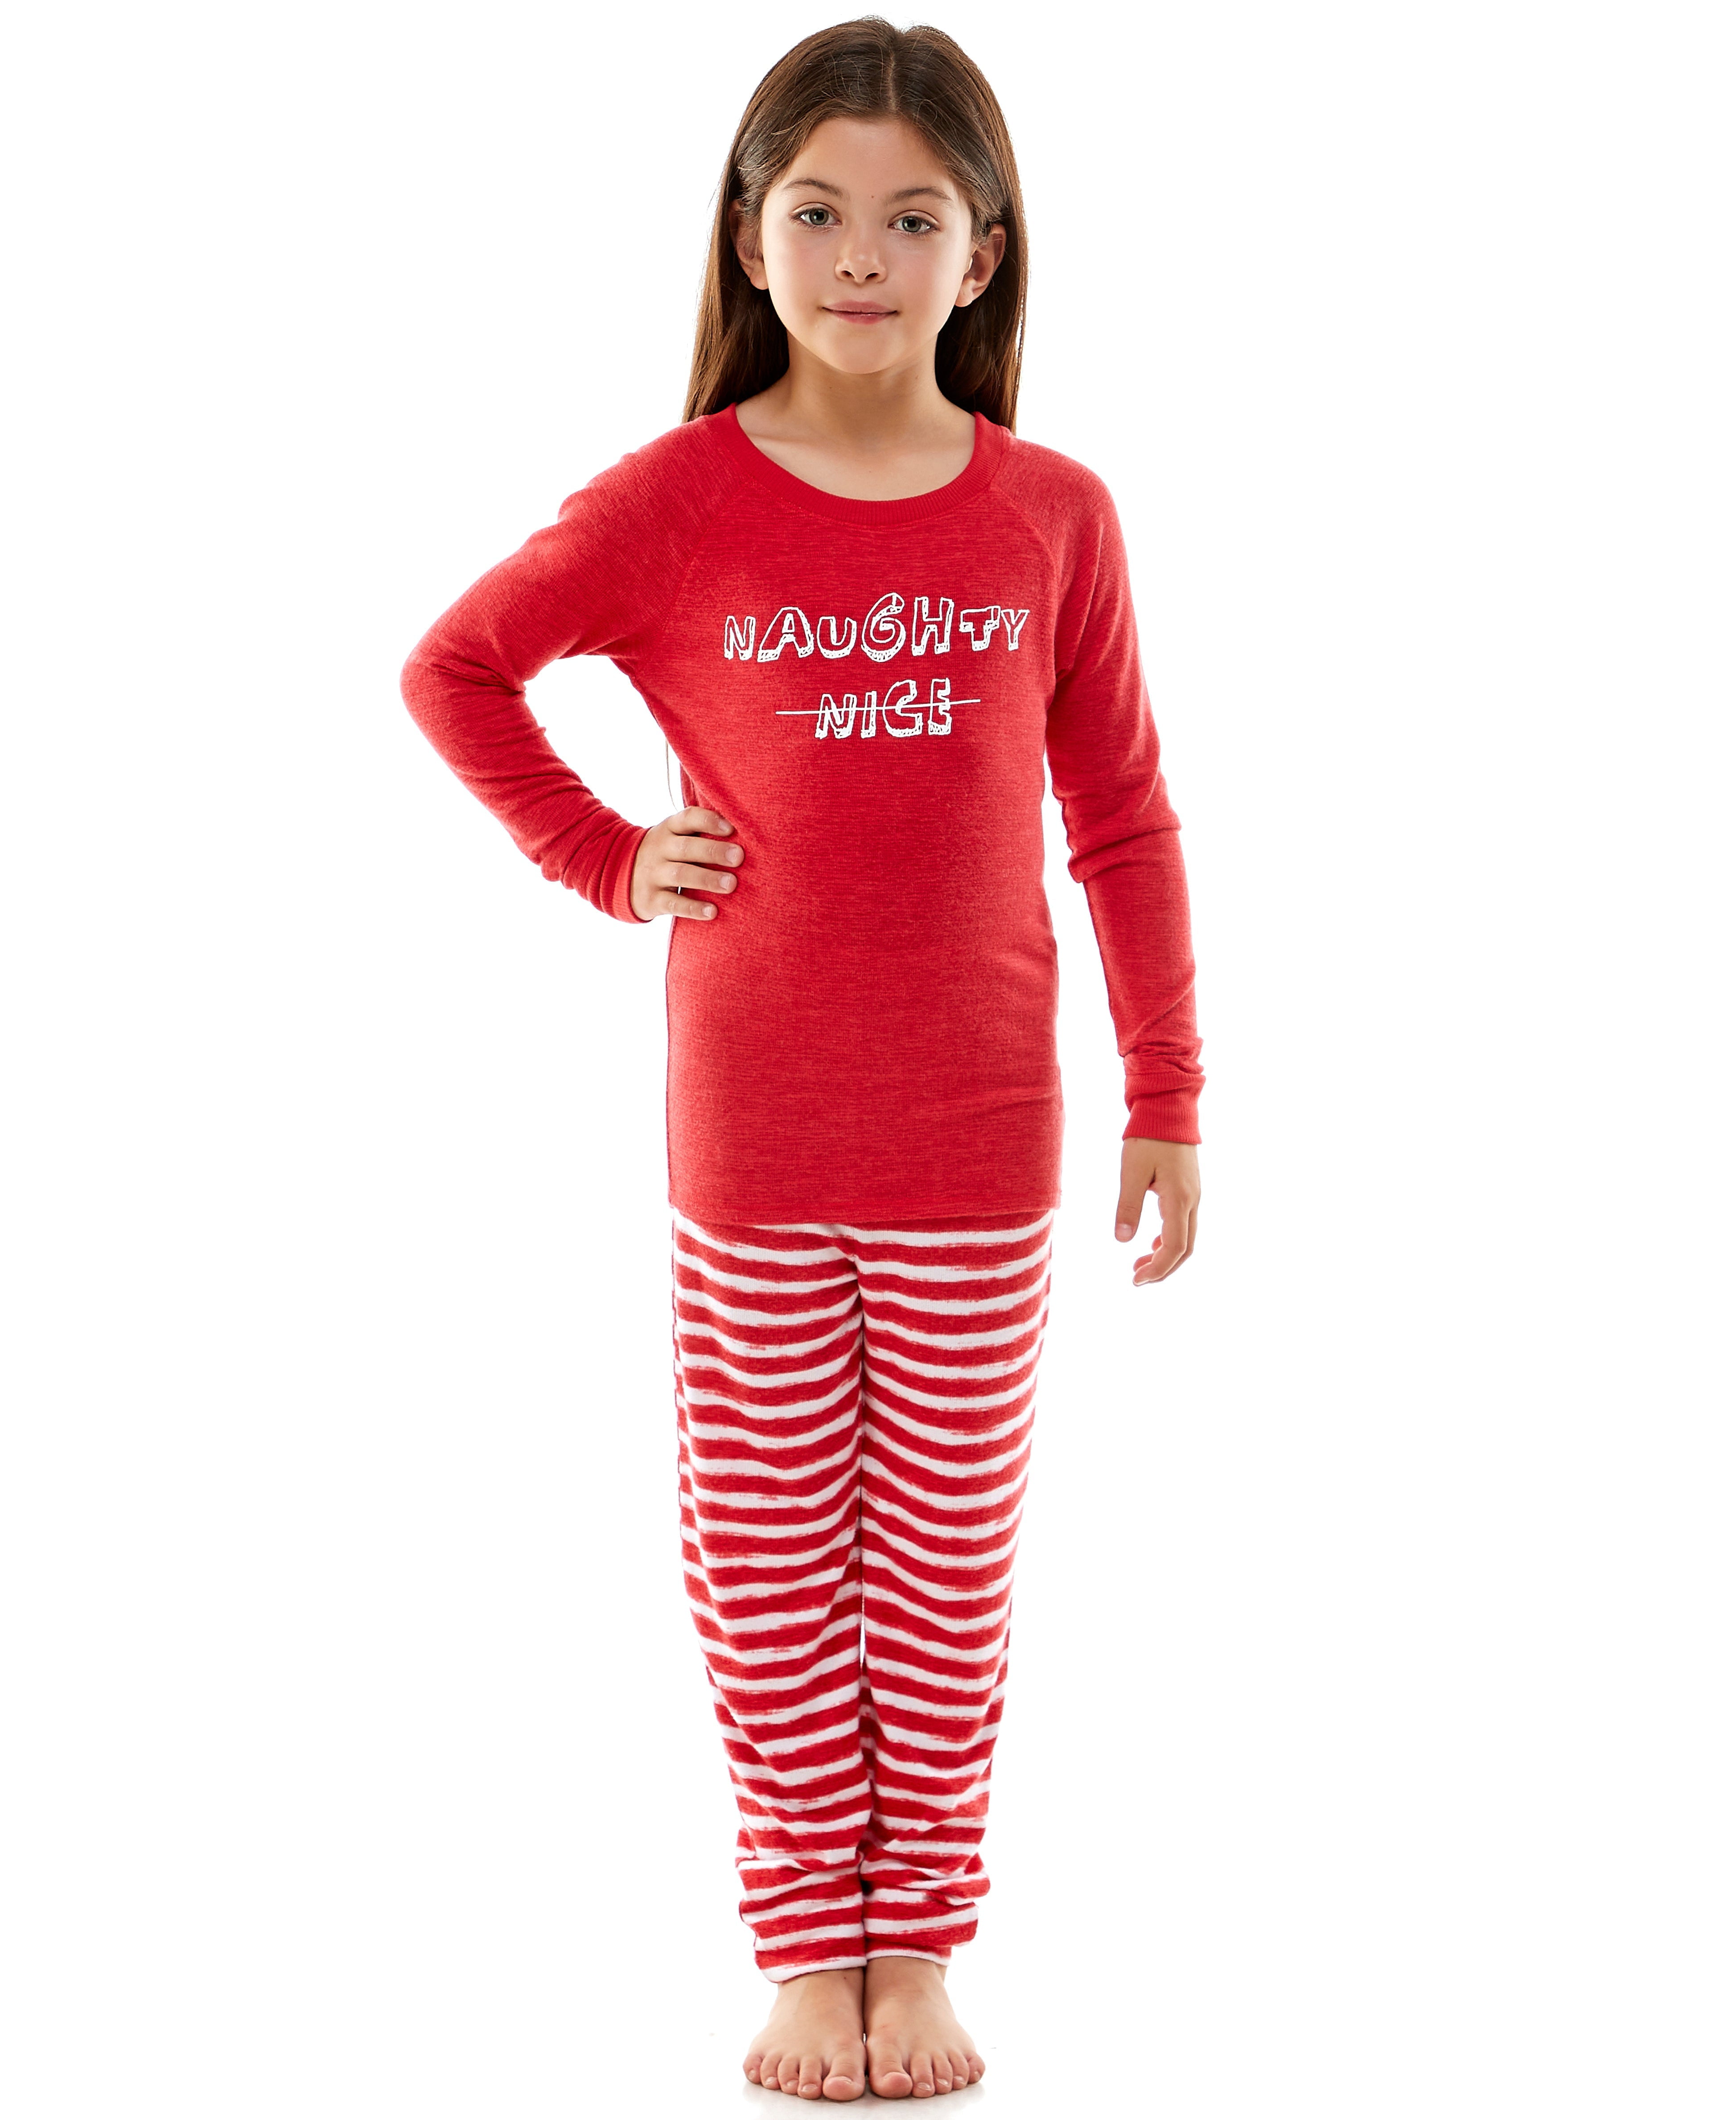 Roudelain Matching Family Christmas Pajamas, Santa's List - Walmart.com